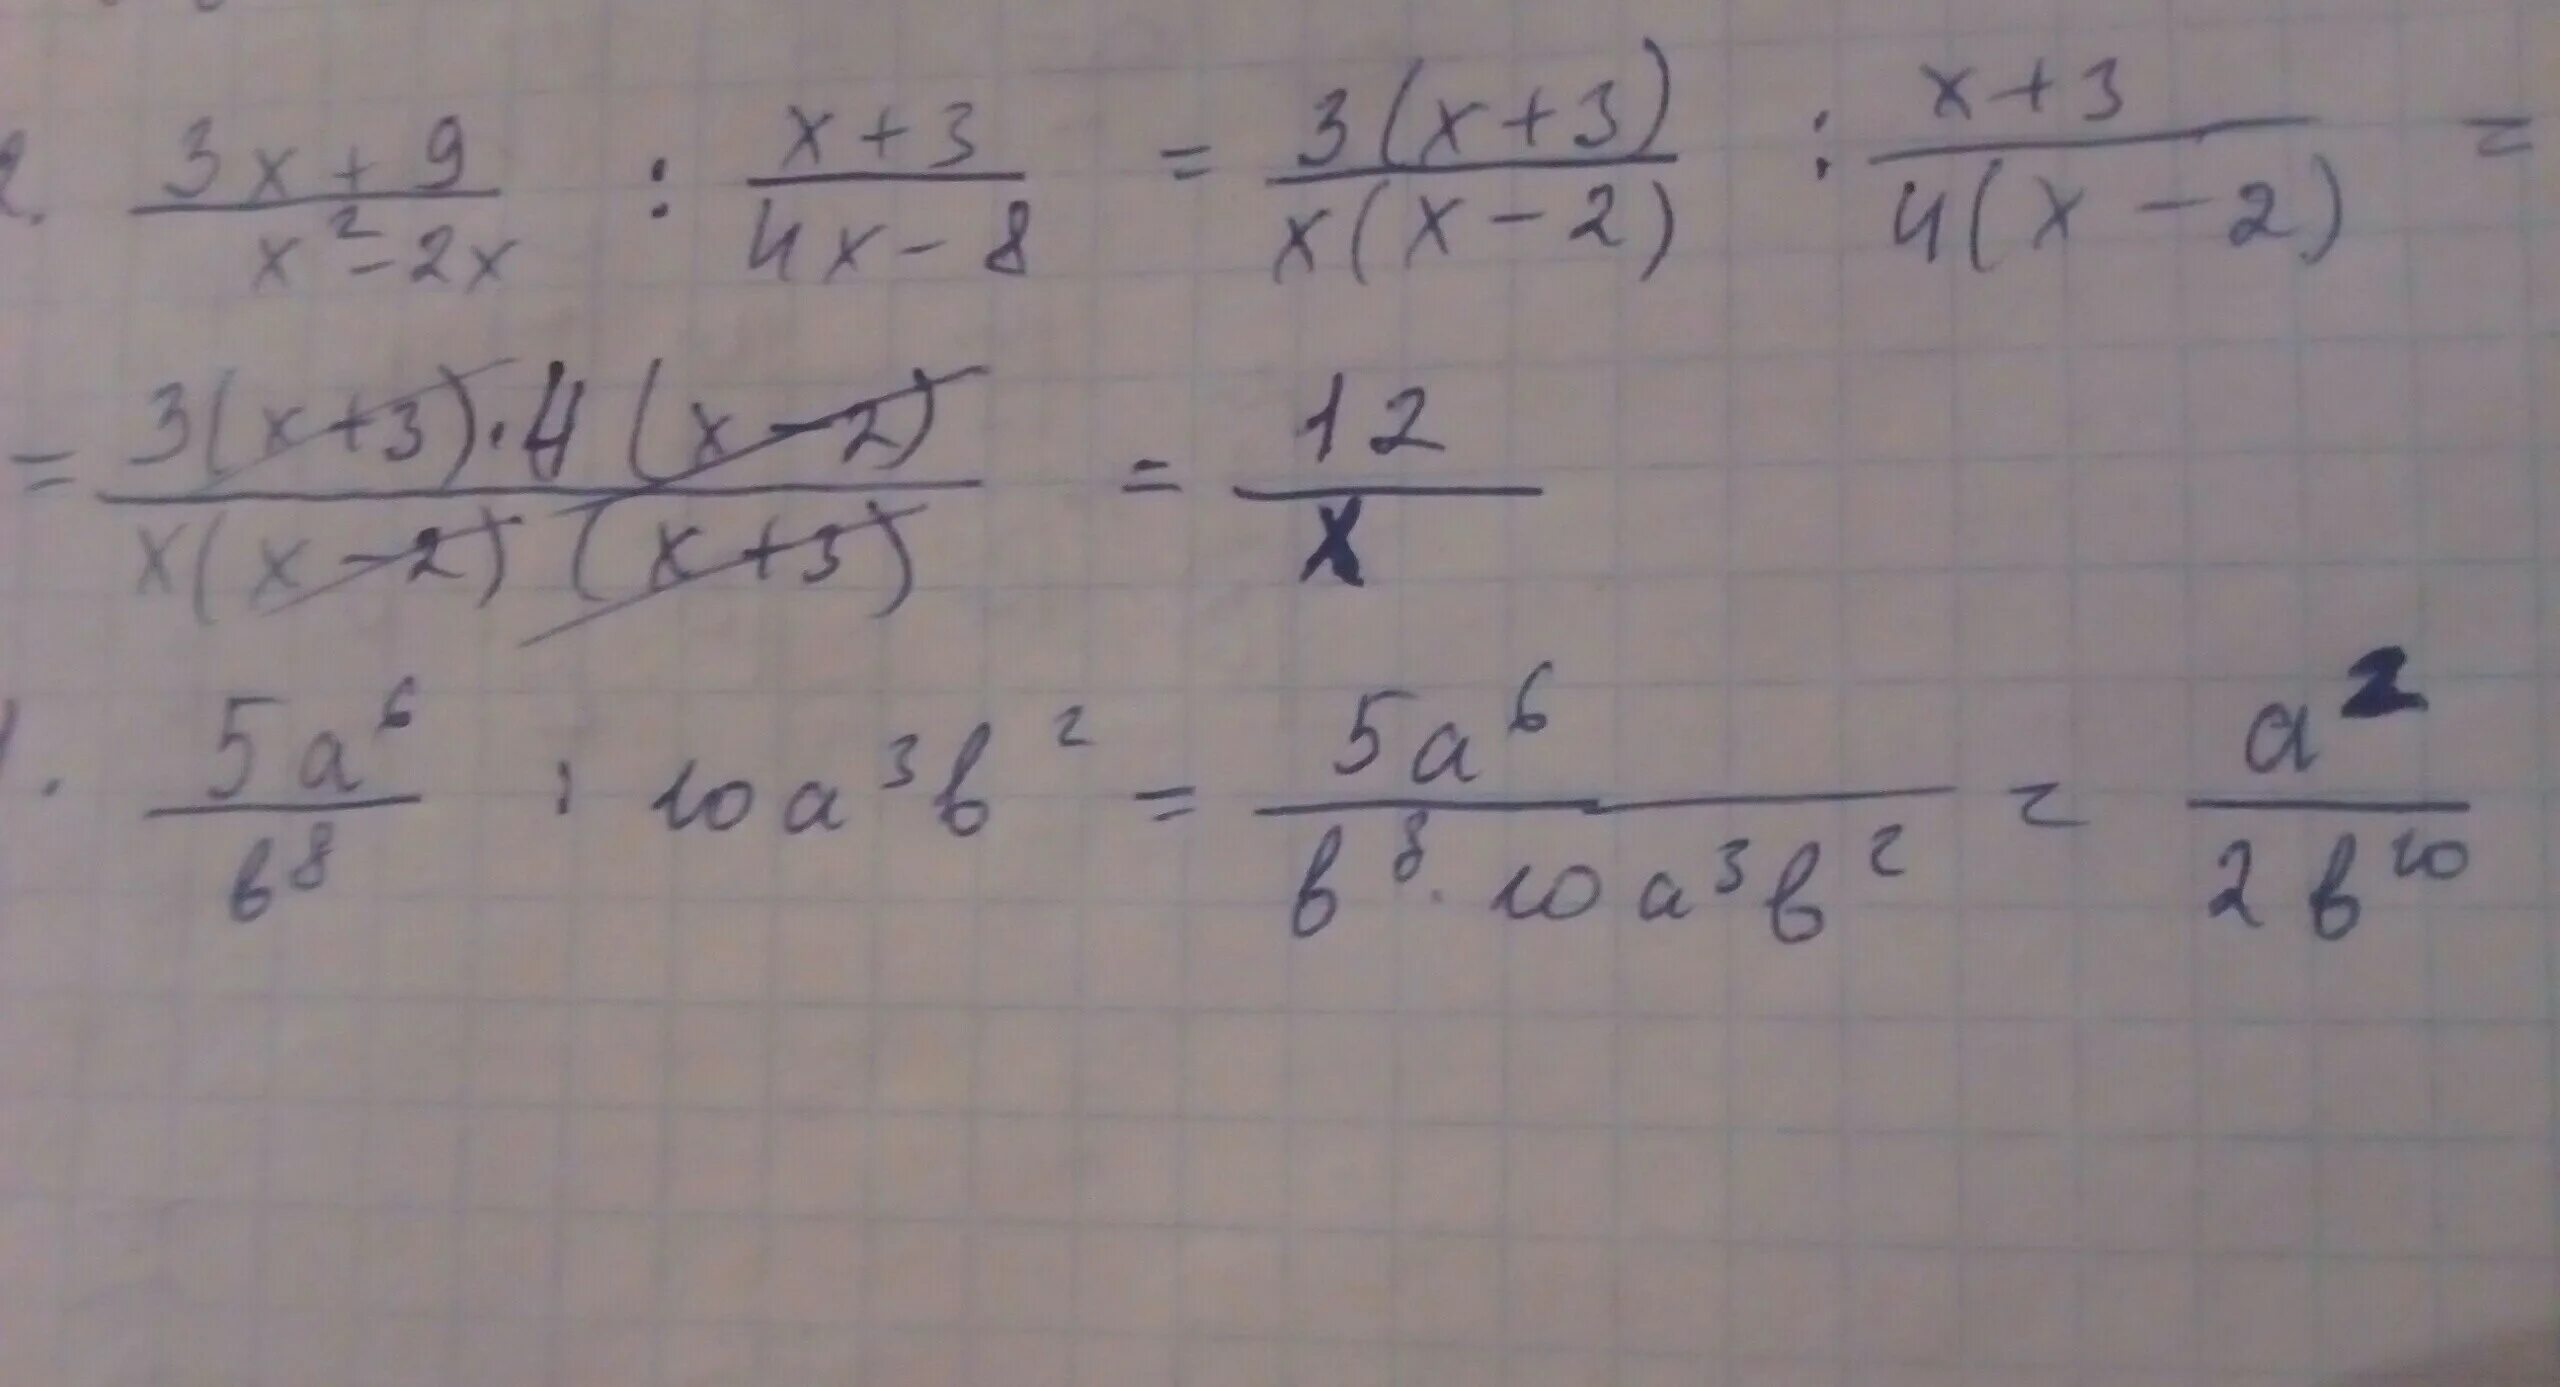 (Х-3)(Х+3). 3/Х+2-5/Х-3 -9/2. Х+1/3=5/6. Упростите выражения -9(3x-1/9)+(x+4/9).